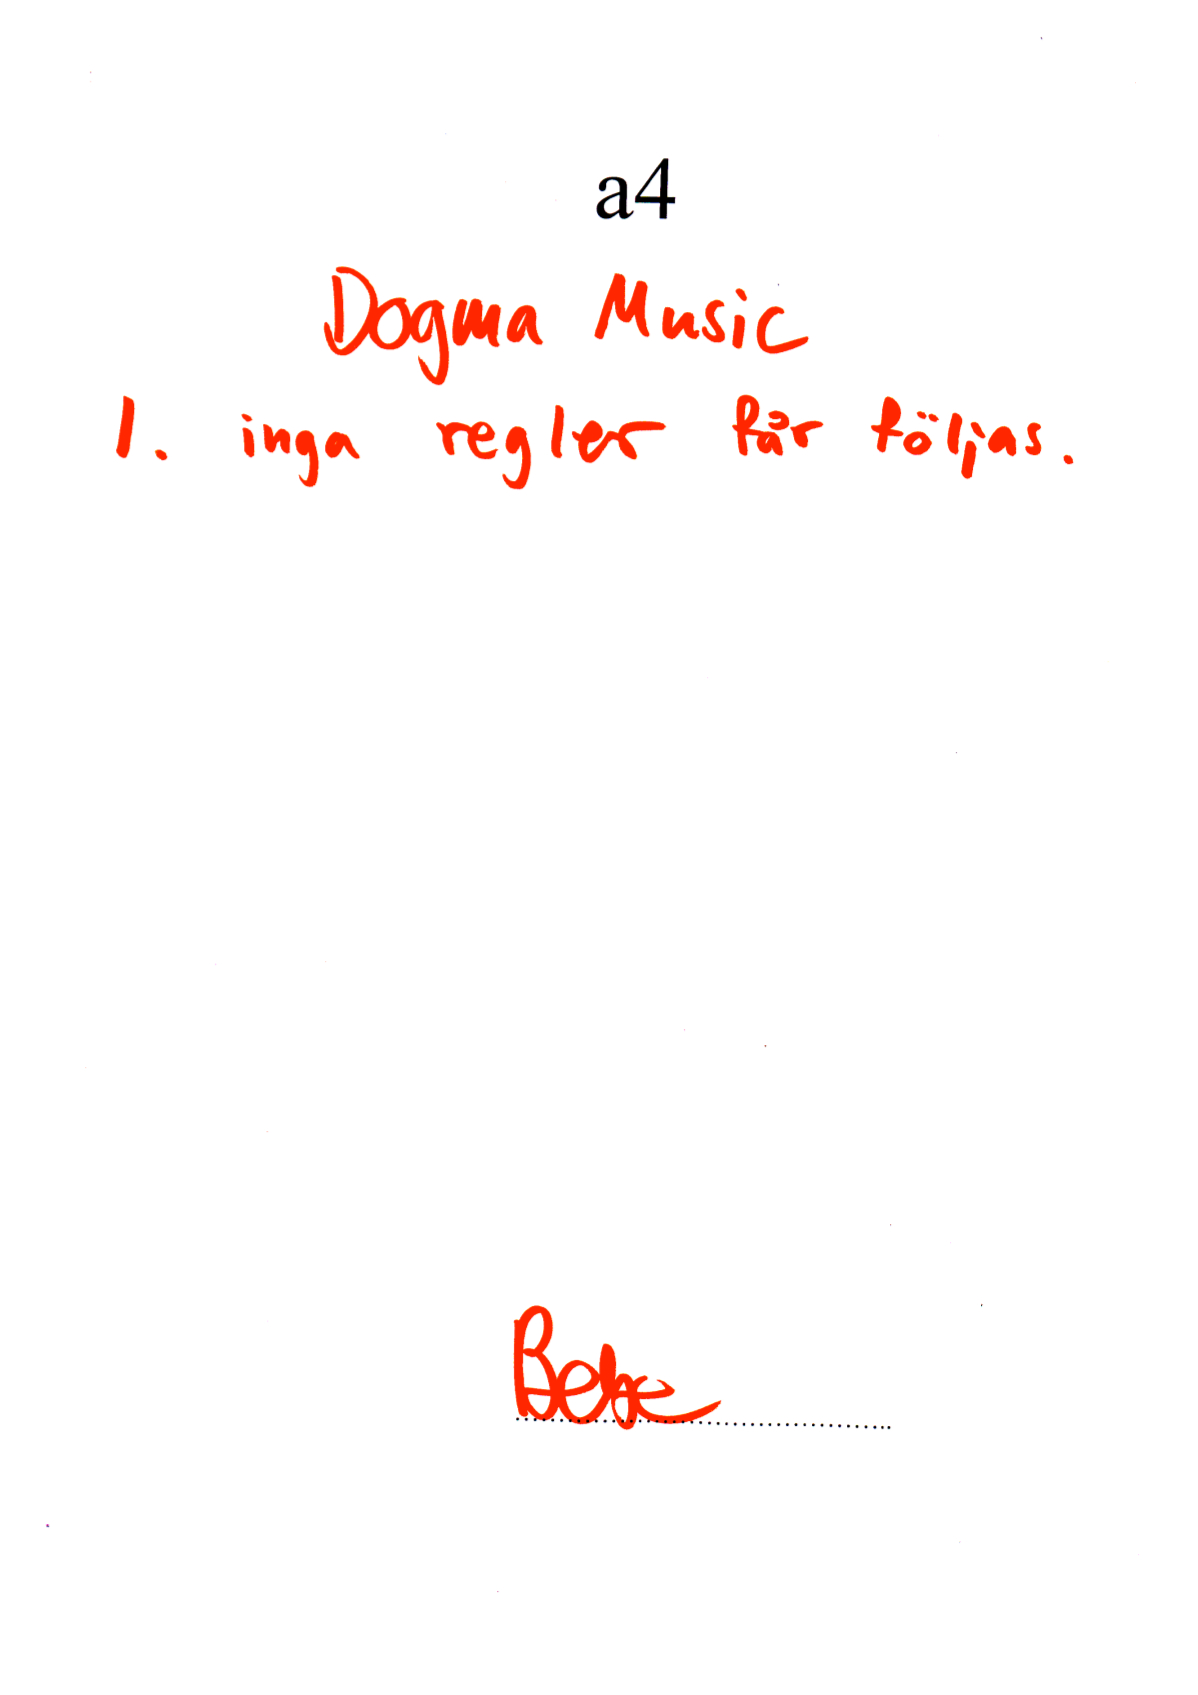 Dogma music